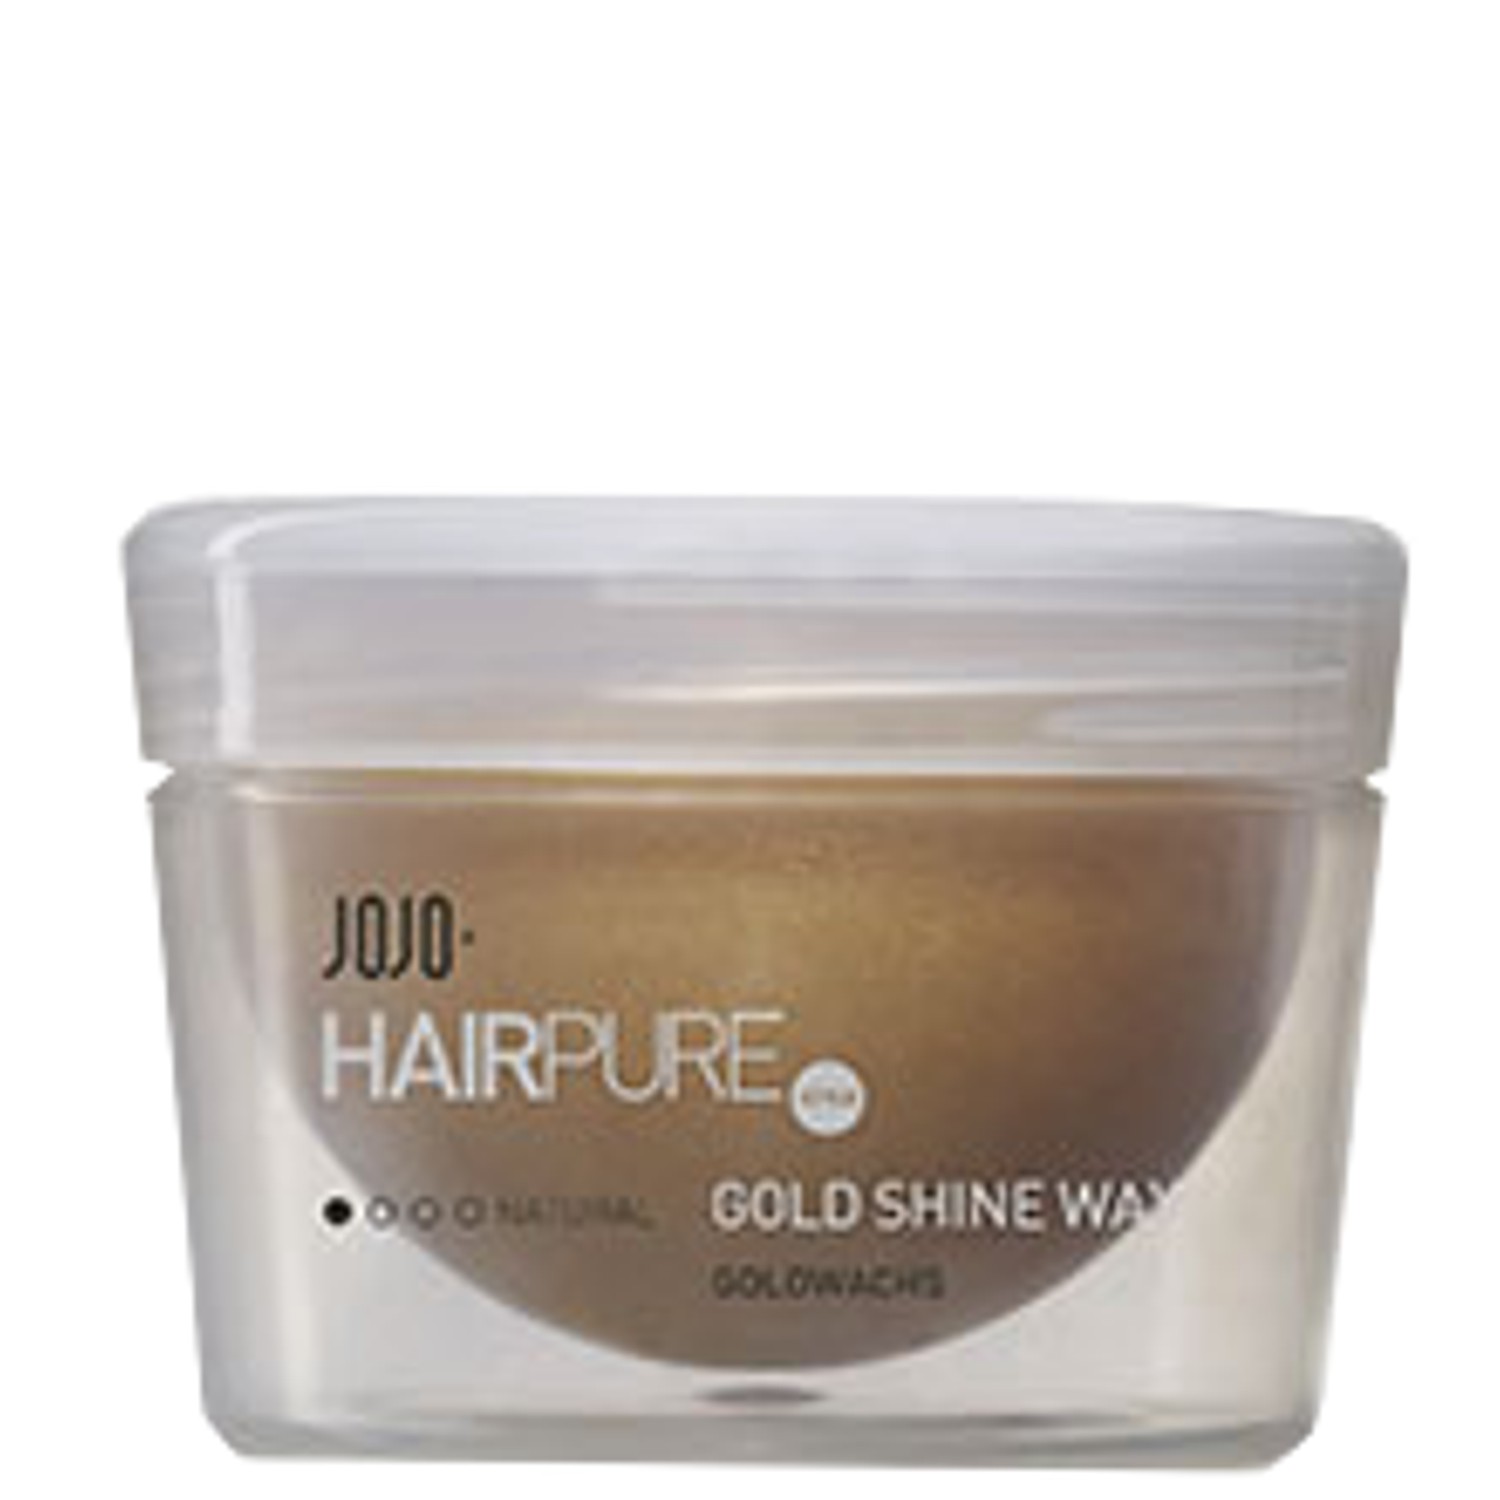 HAIRPURE Gold Shine Wax 50 ml